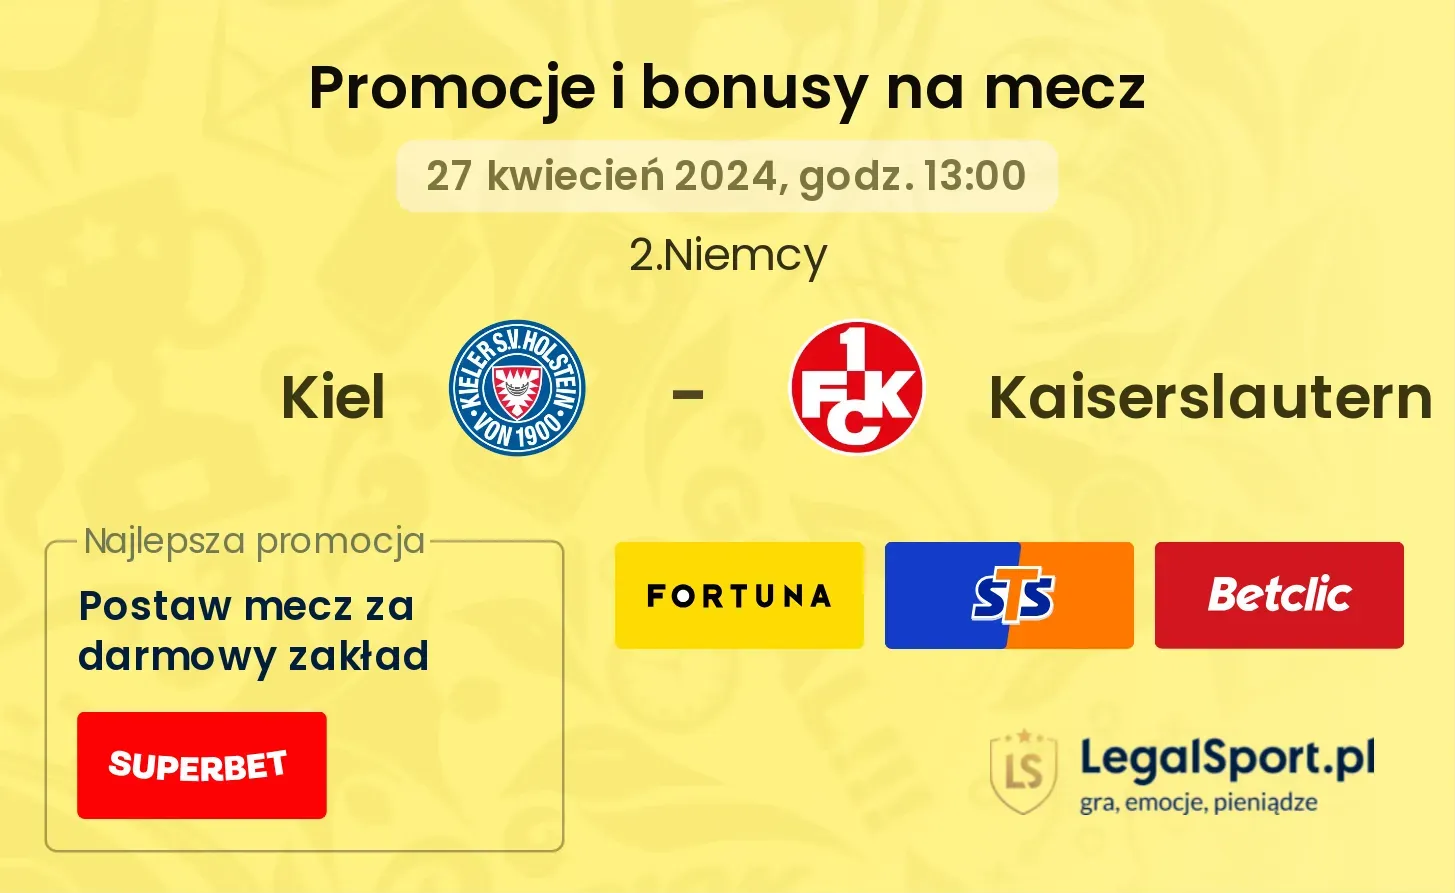 Kiel - Kaiserslautern promocje bonusy na mecz